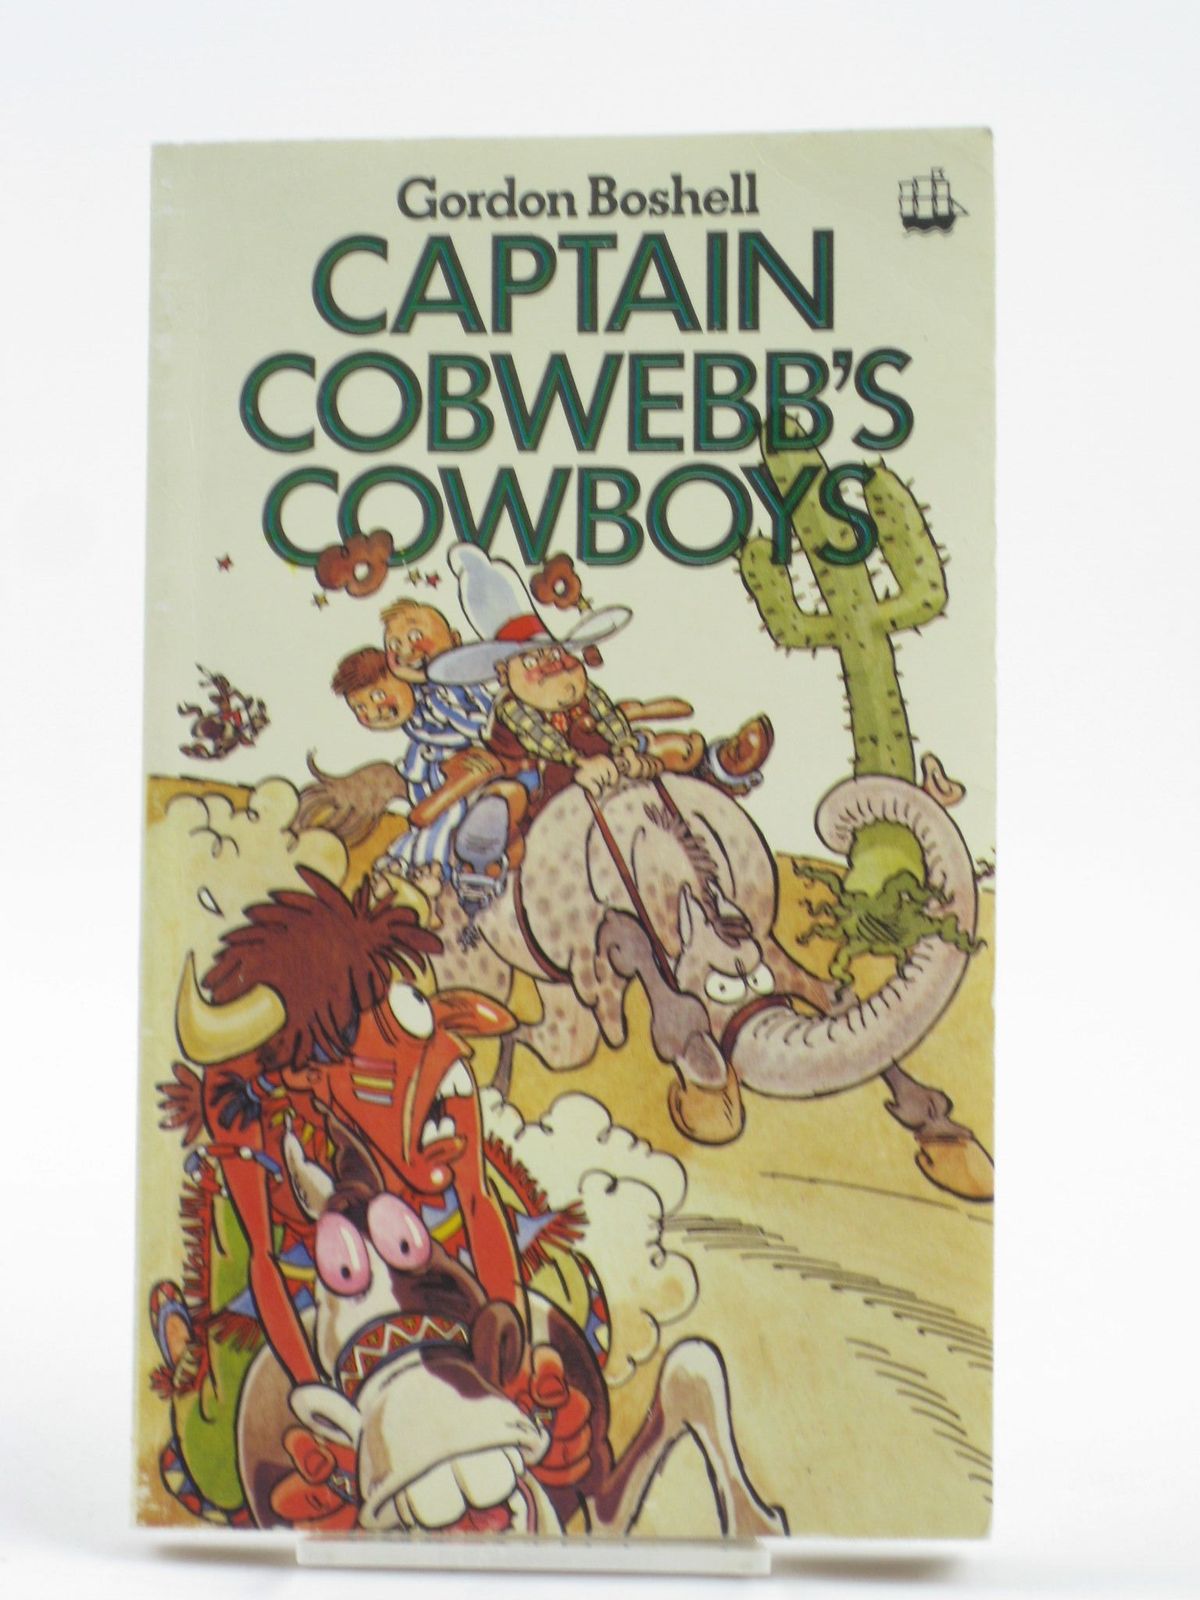 CAPTAIN COBWEBB'S COWBOYS - Boshell, Gordon